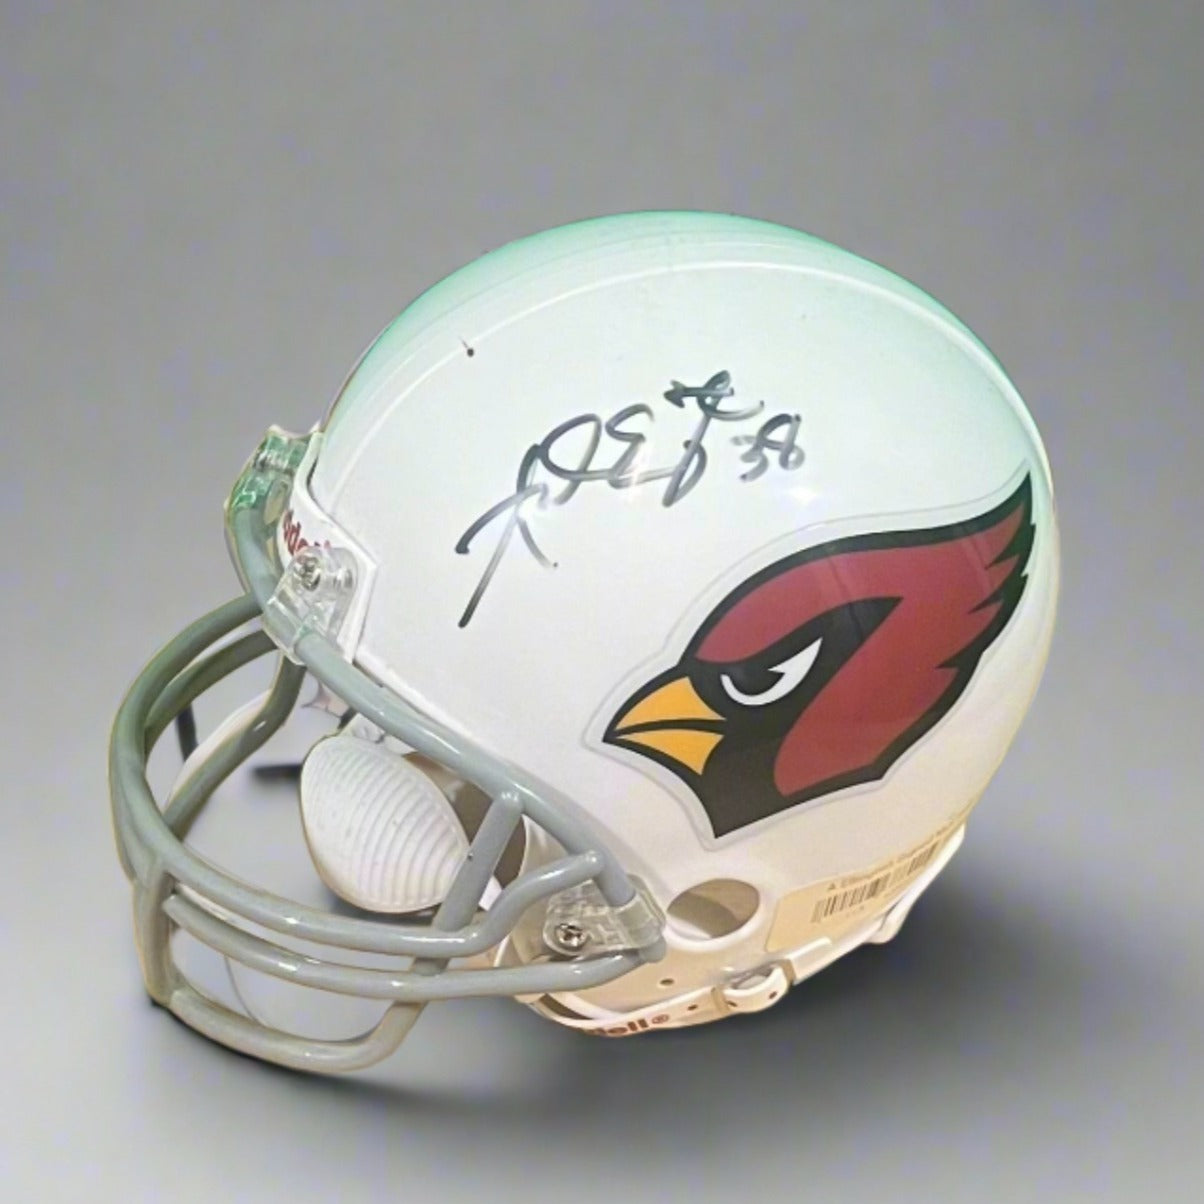 A Ellington Signed Mini Helmet